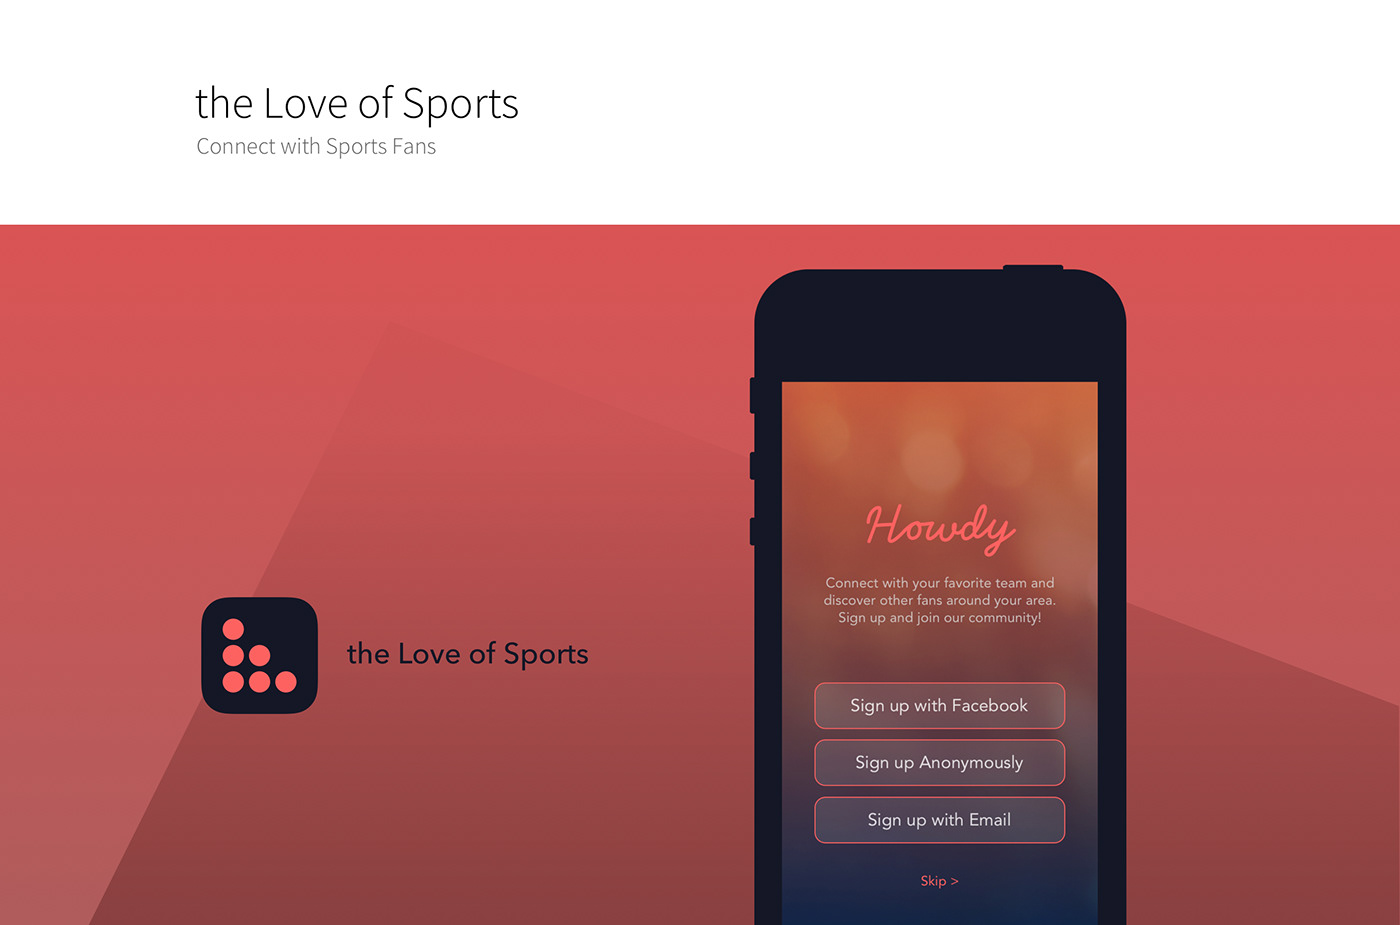 Mobile app sports UI/UX app